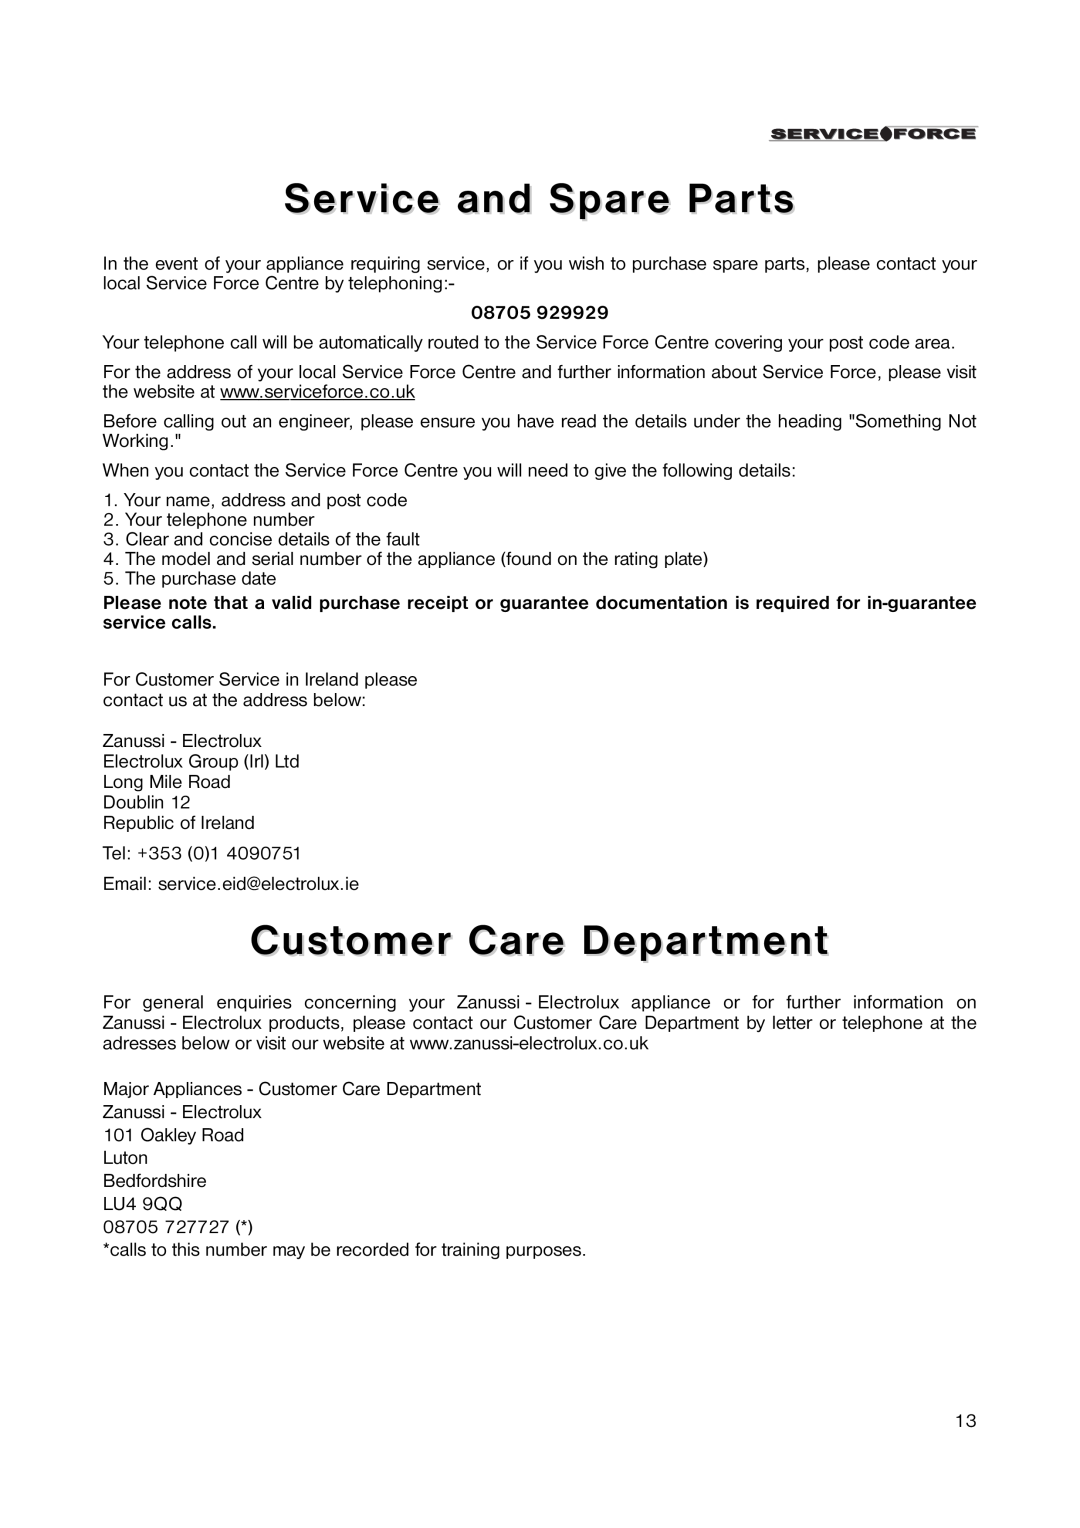 Zanussi ZRB 2641 manual Service and Spare Parts, Customer Care Department, 08705 